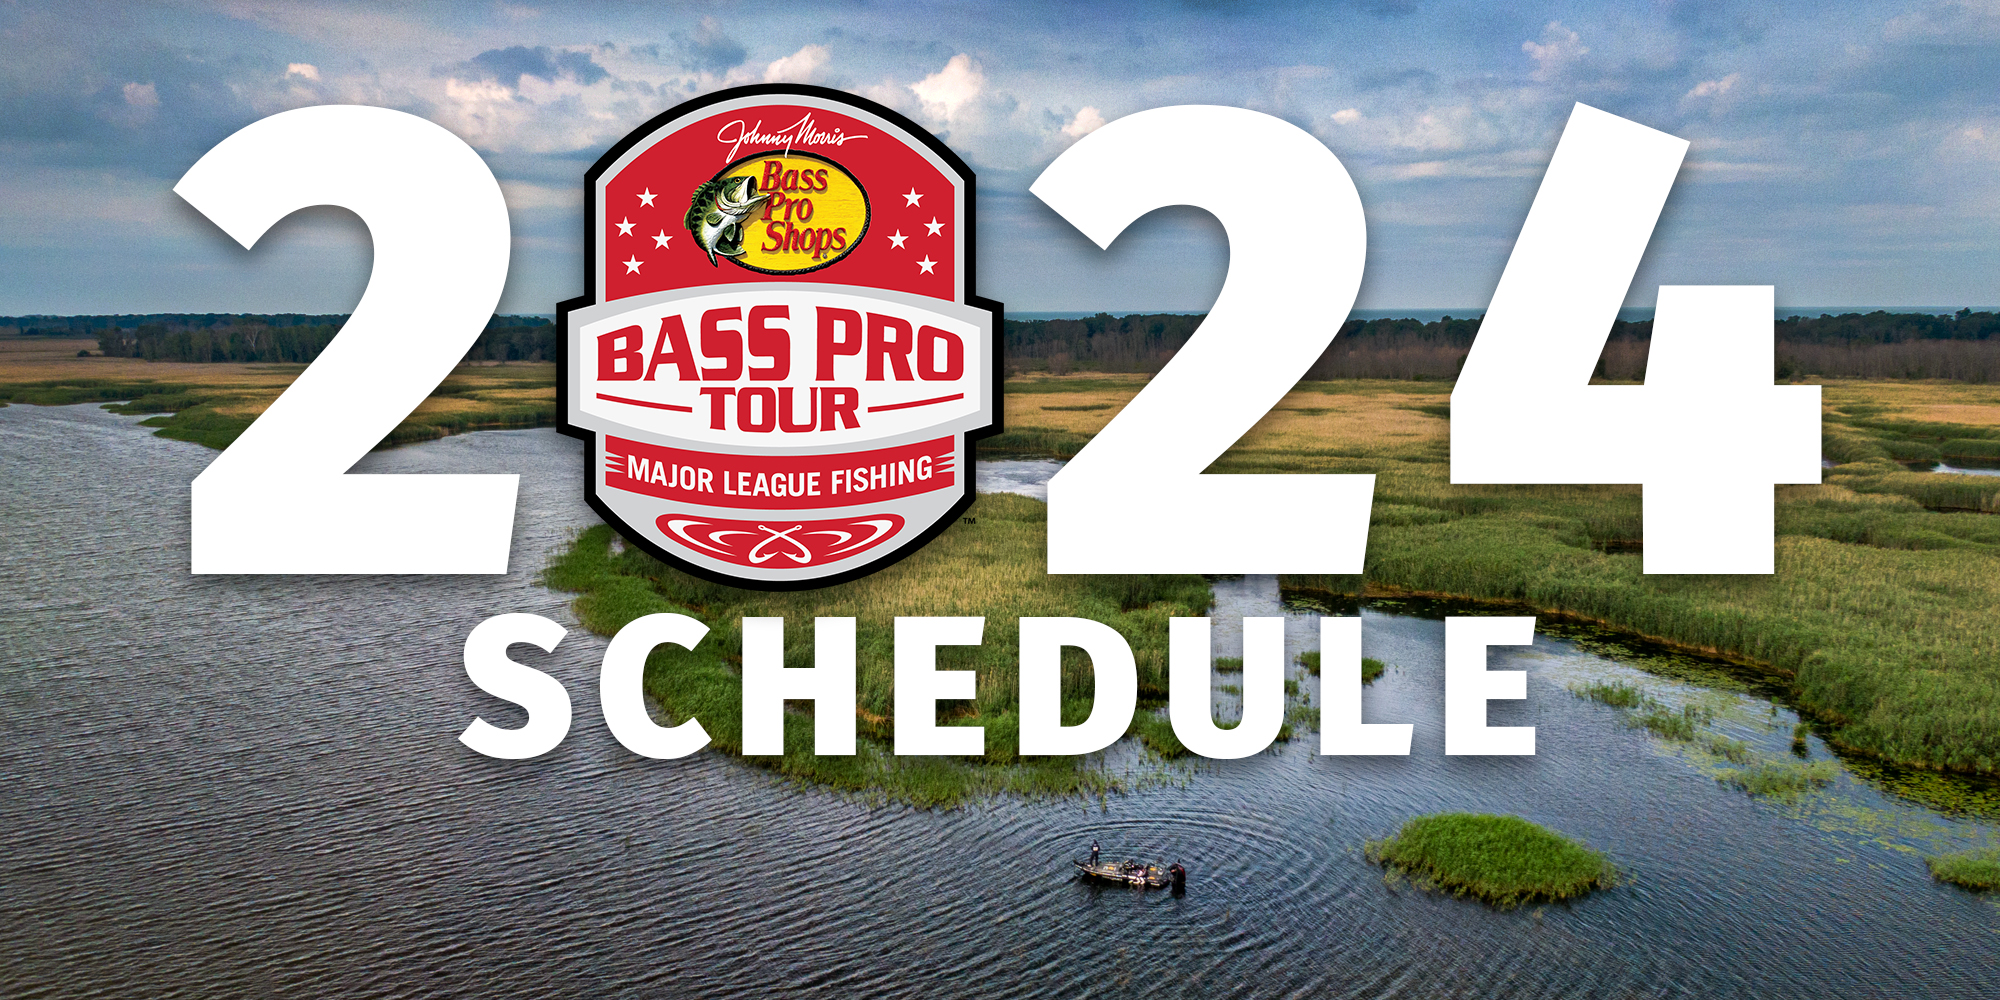 The 2023 Bass Pro Tour calendar - Major League Fishing